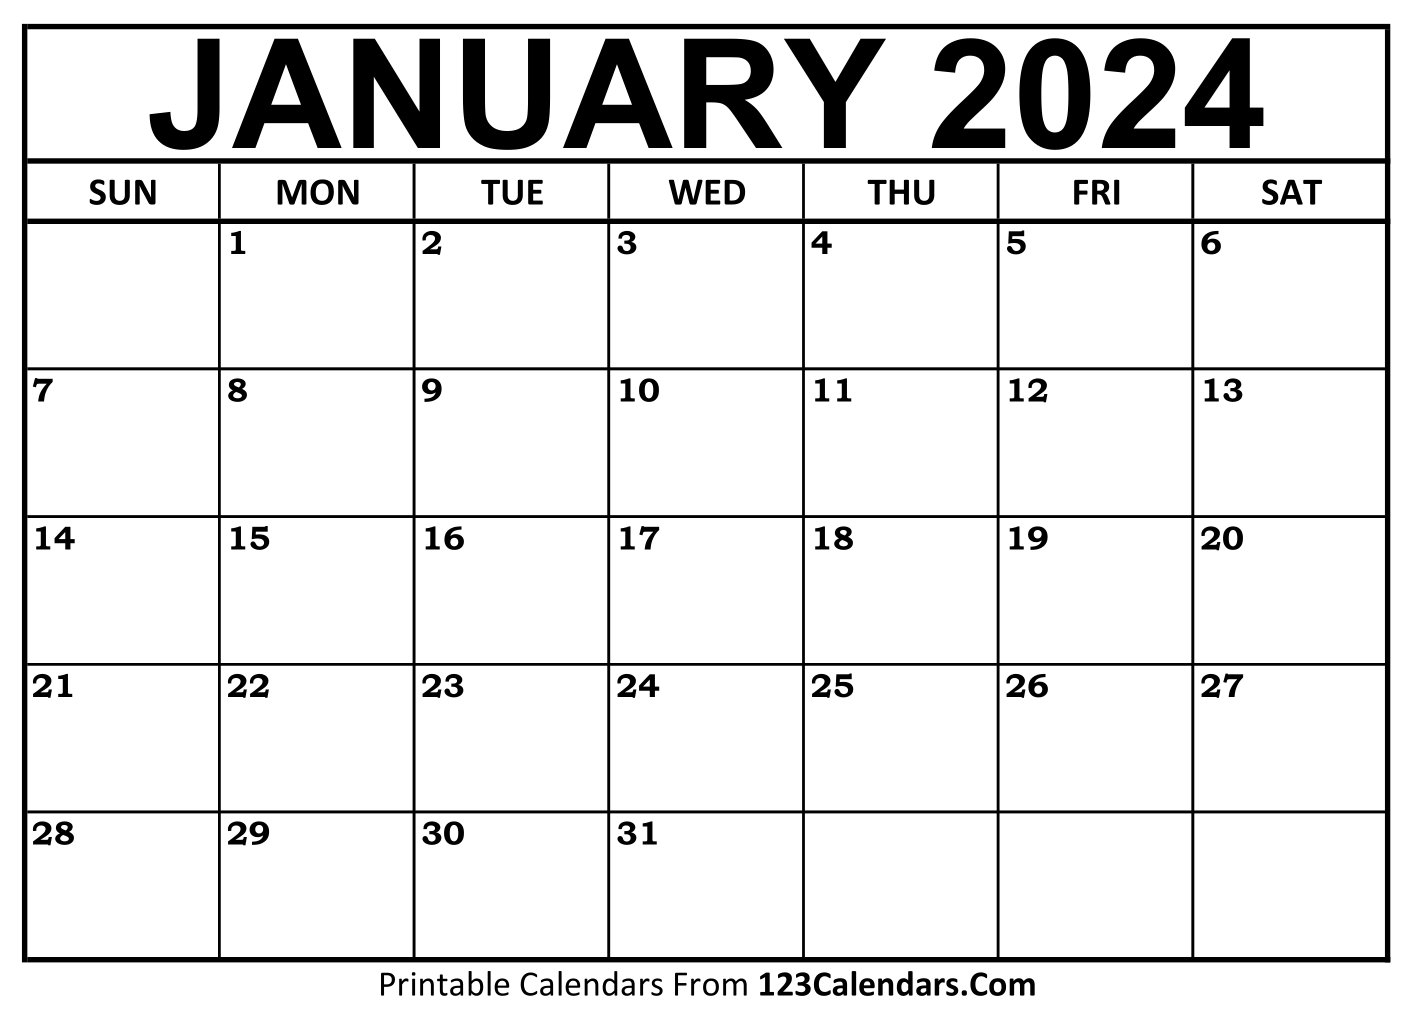 Printable January 2024 Calendar Templates - 123Calendars for Blank Printable January 2024 Calendar